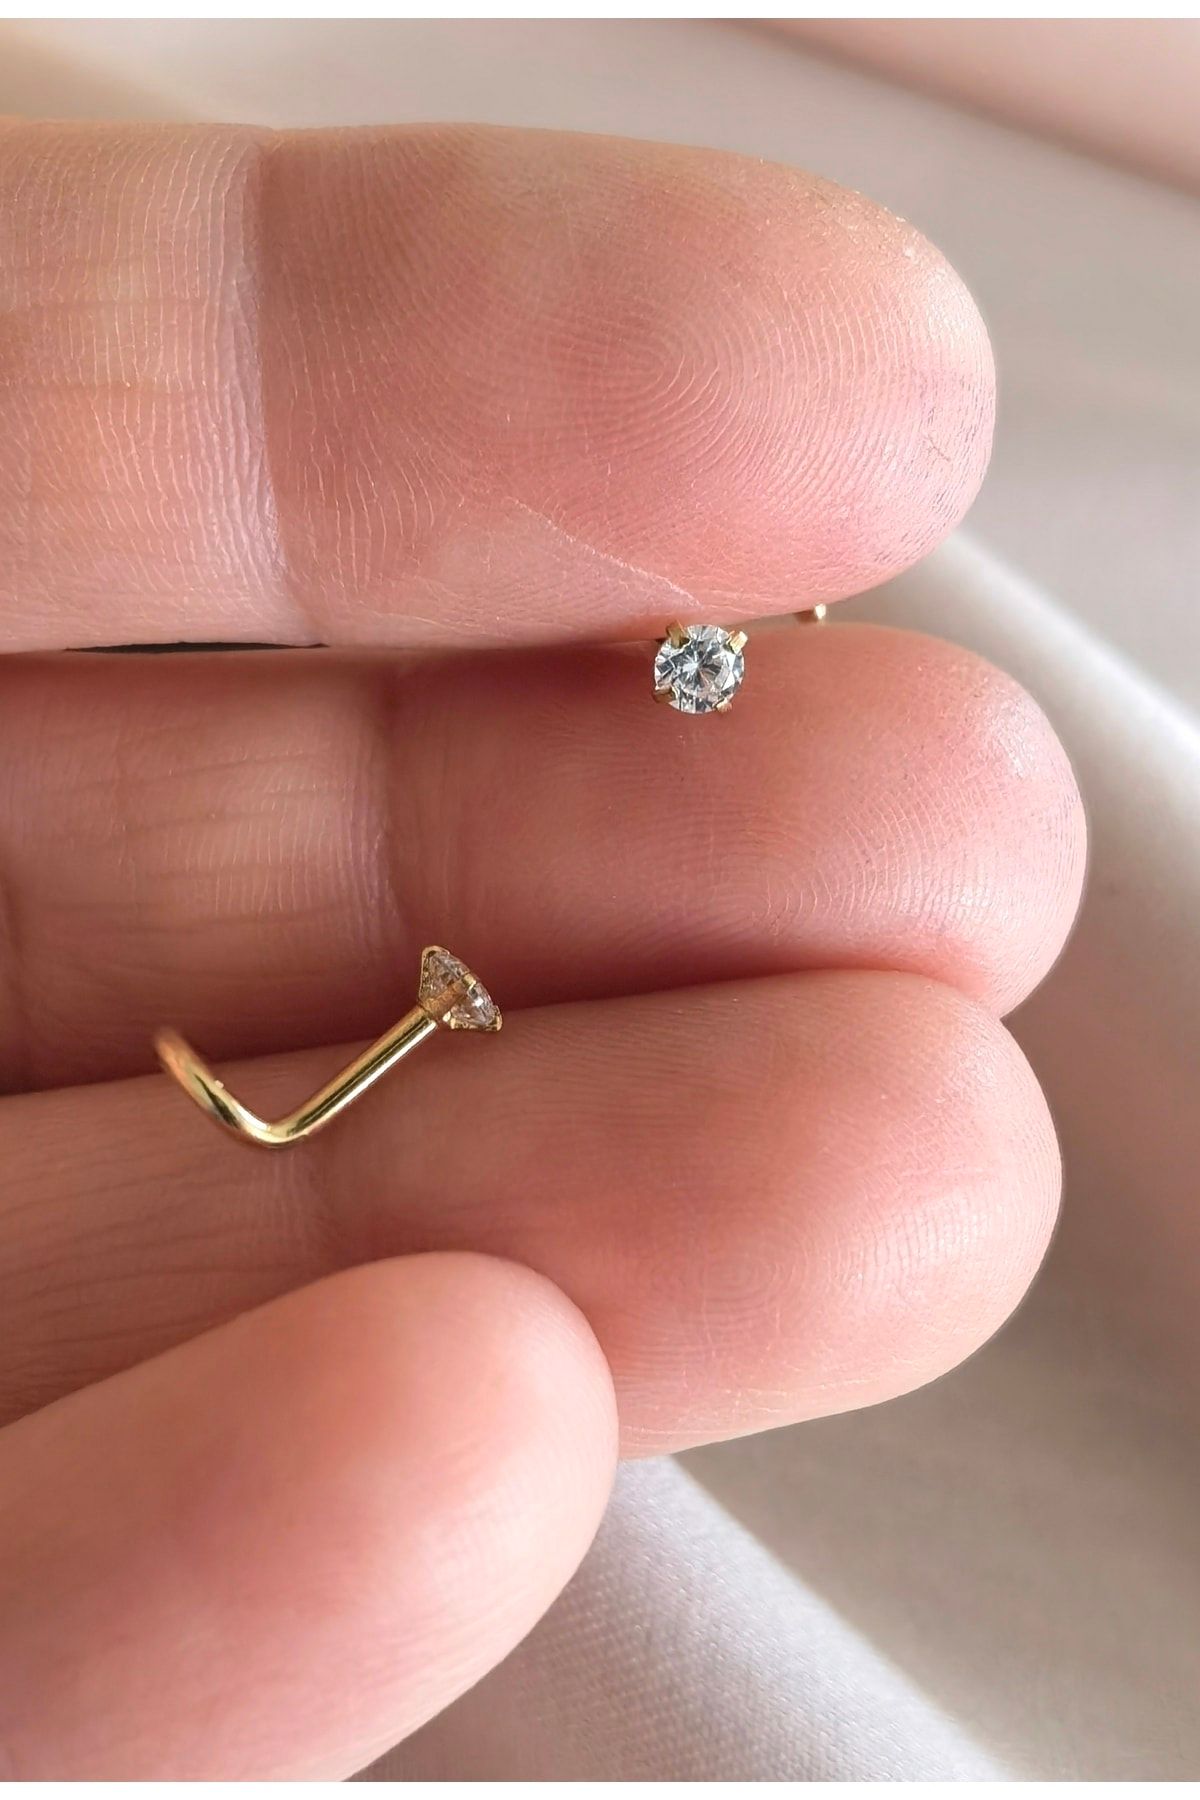 x2 Sterling Silver /Gold 1.2mm Diamond Crystal tiny small Nose Stud Teeny  24g | eBay